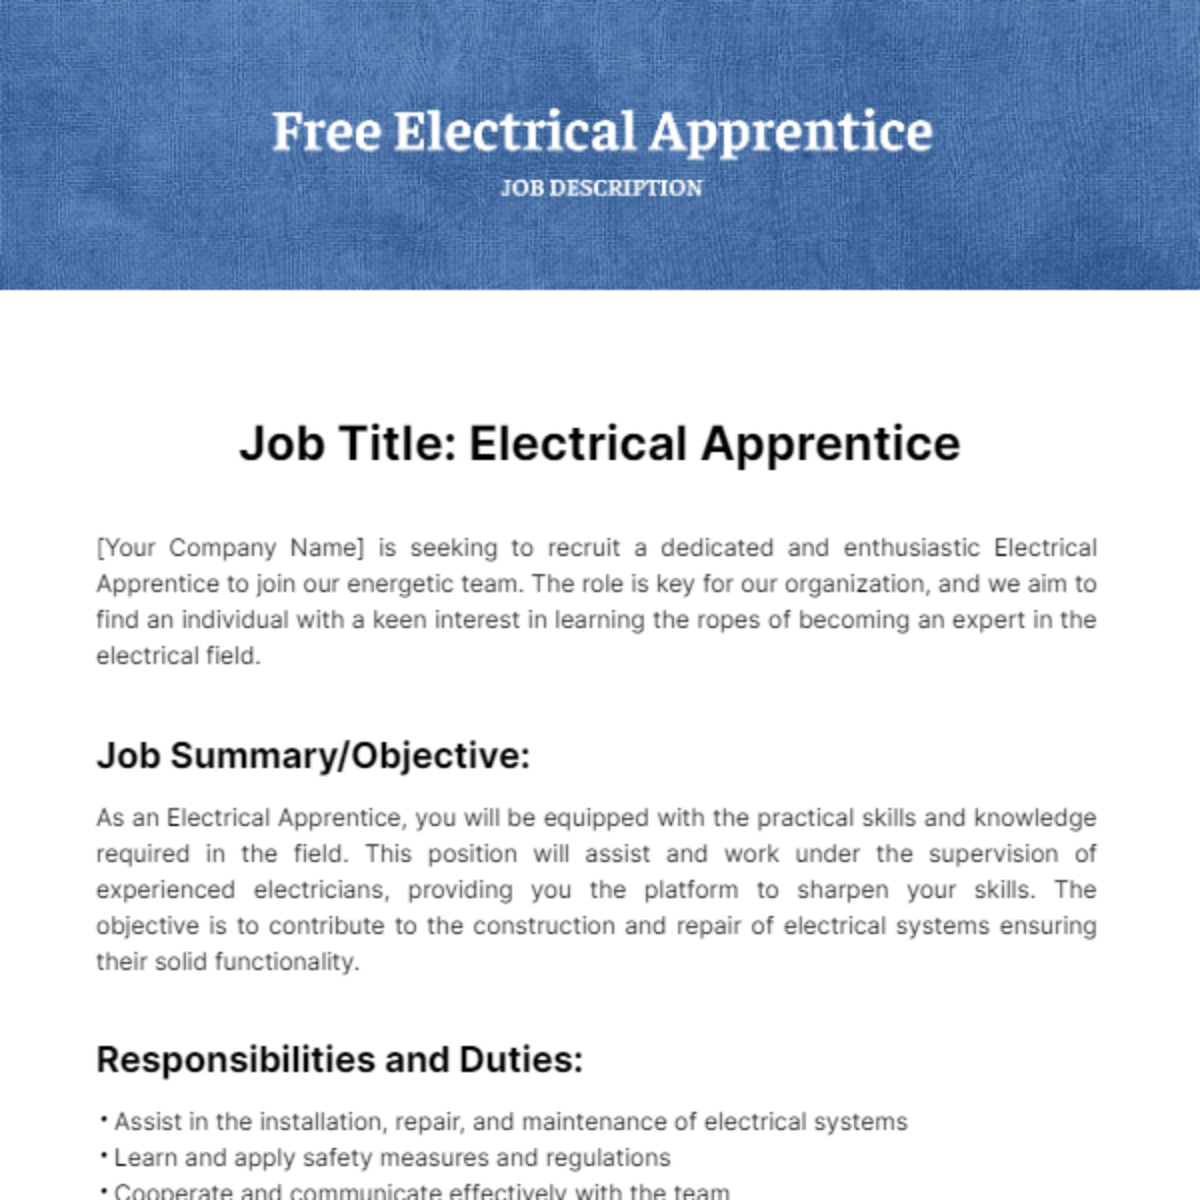 Electrical Apprentice Job Description Template - Edit Online & Download ...